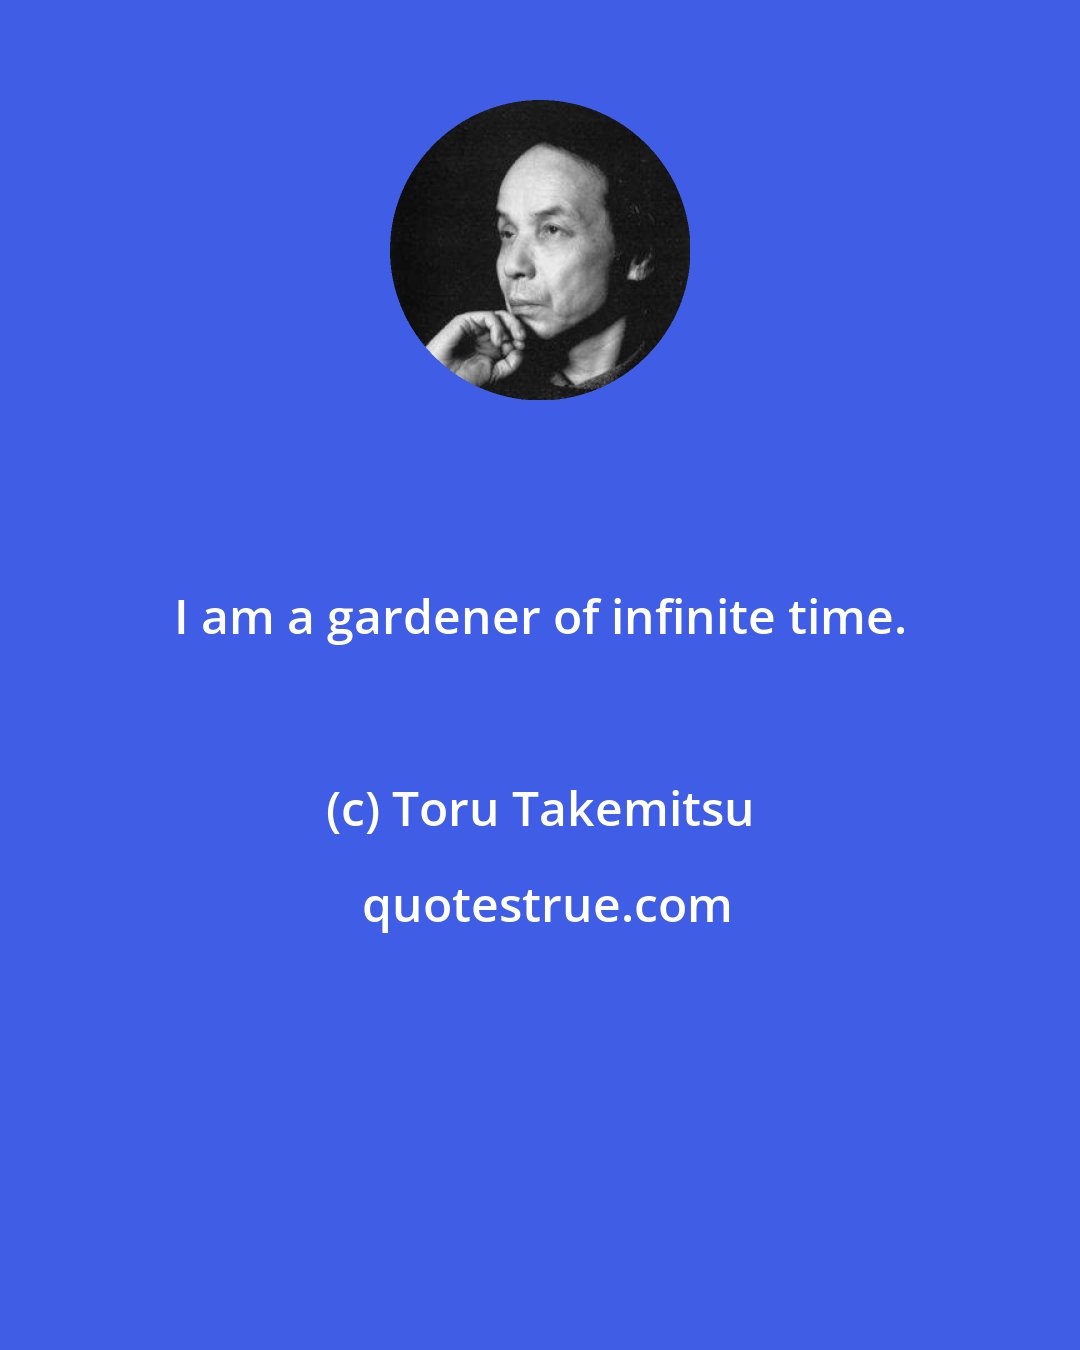 Toru Takemitsu: I am a gardener of infinite time.